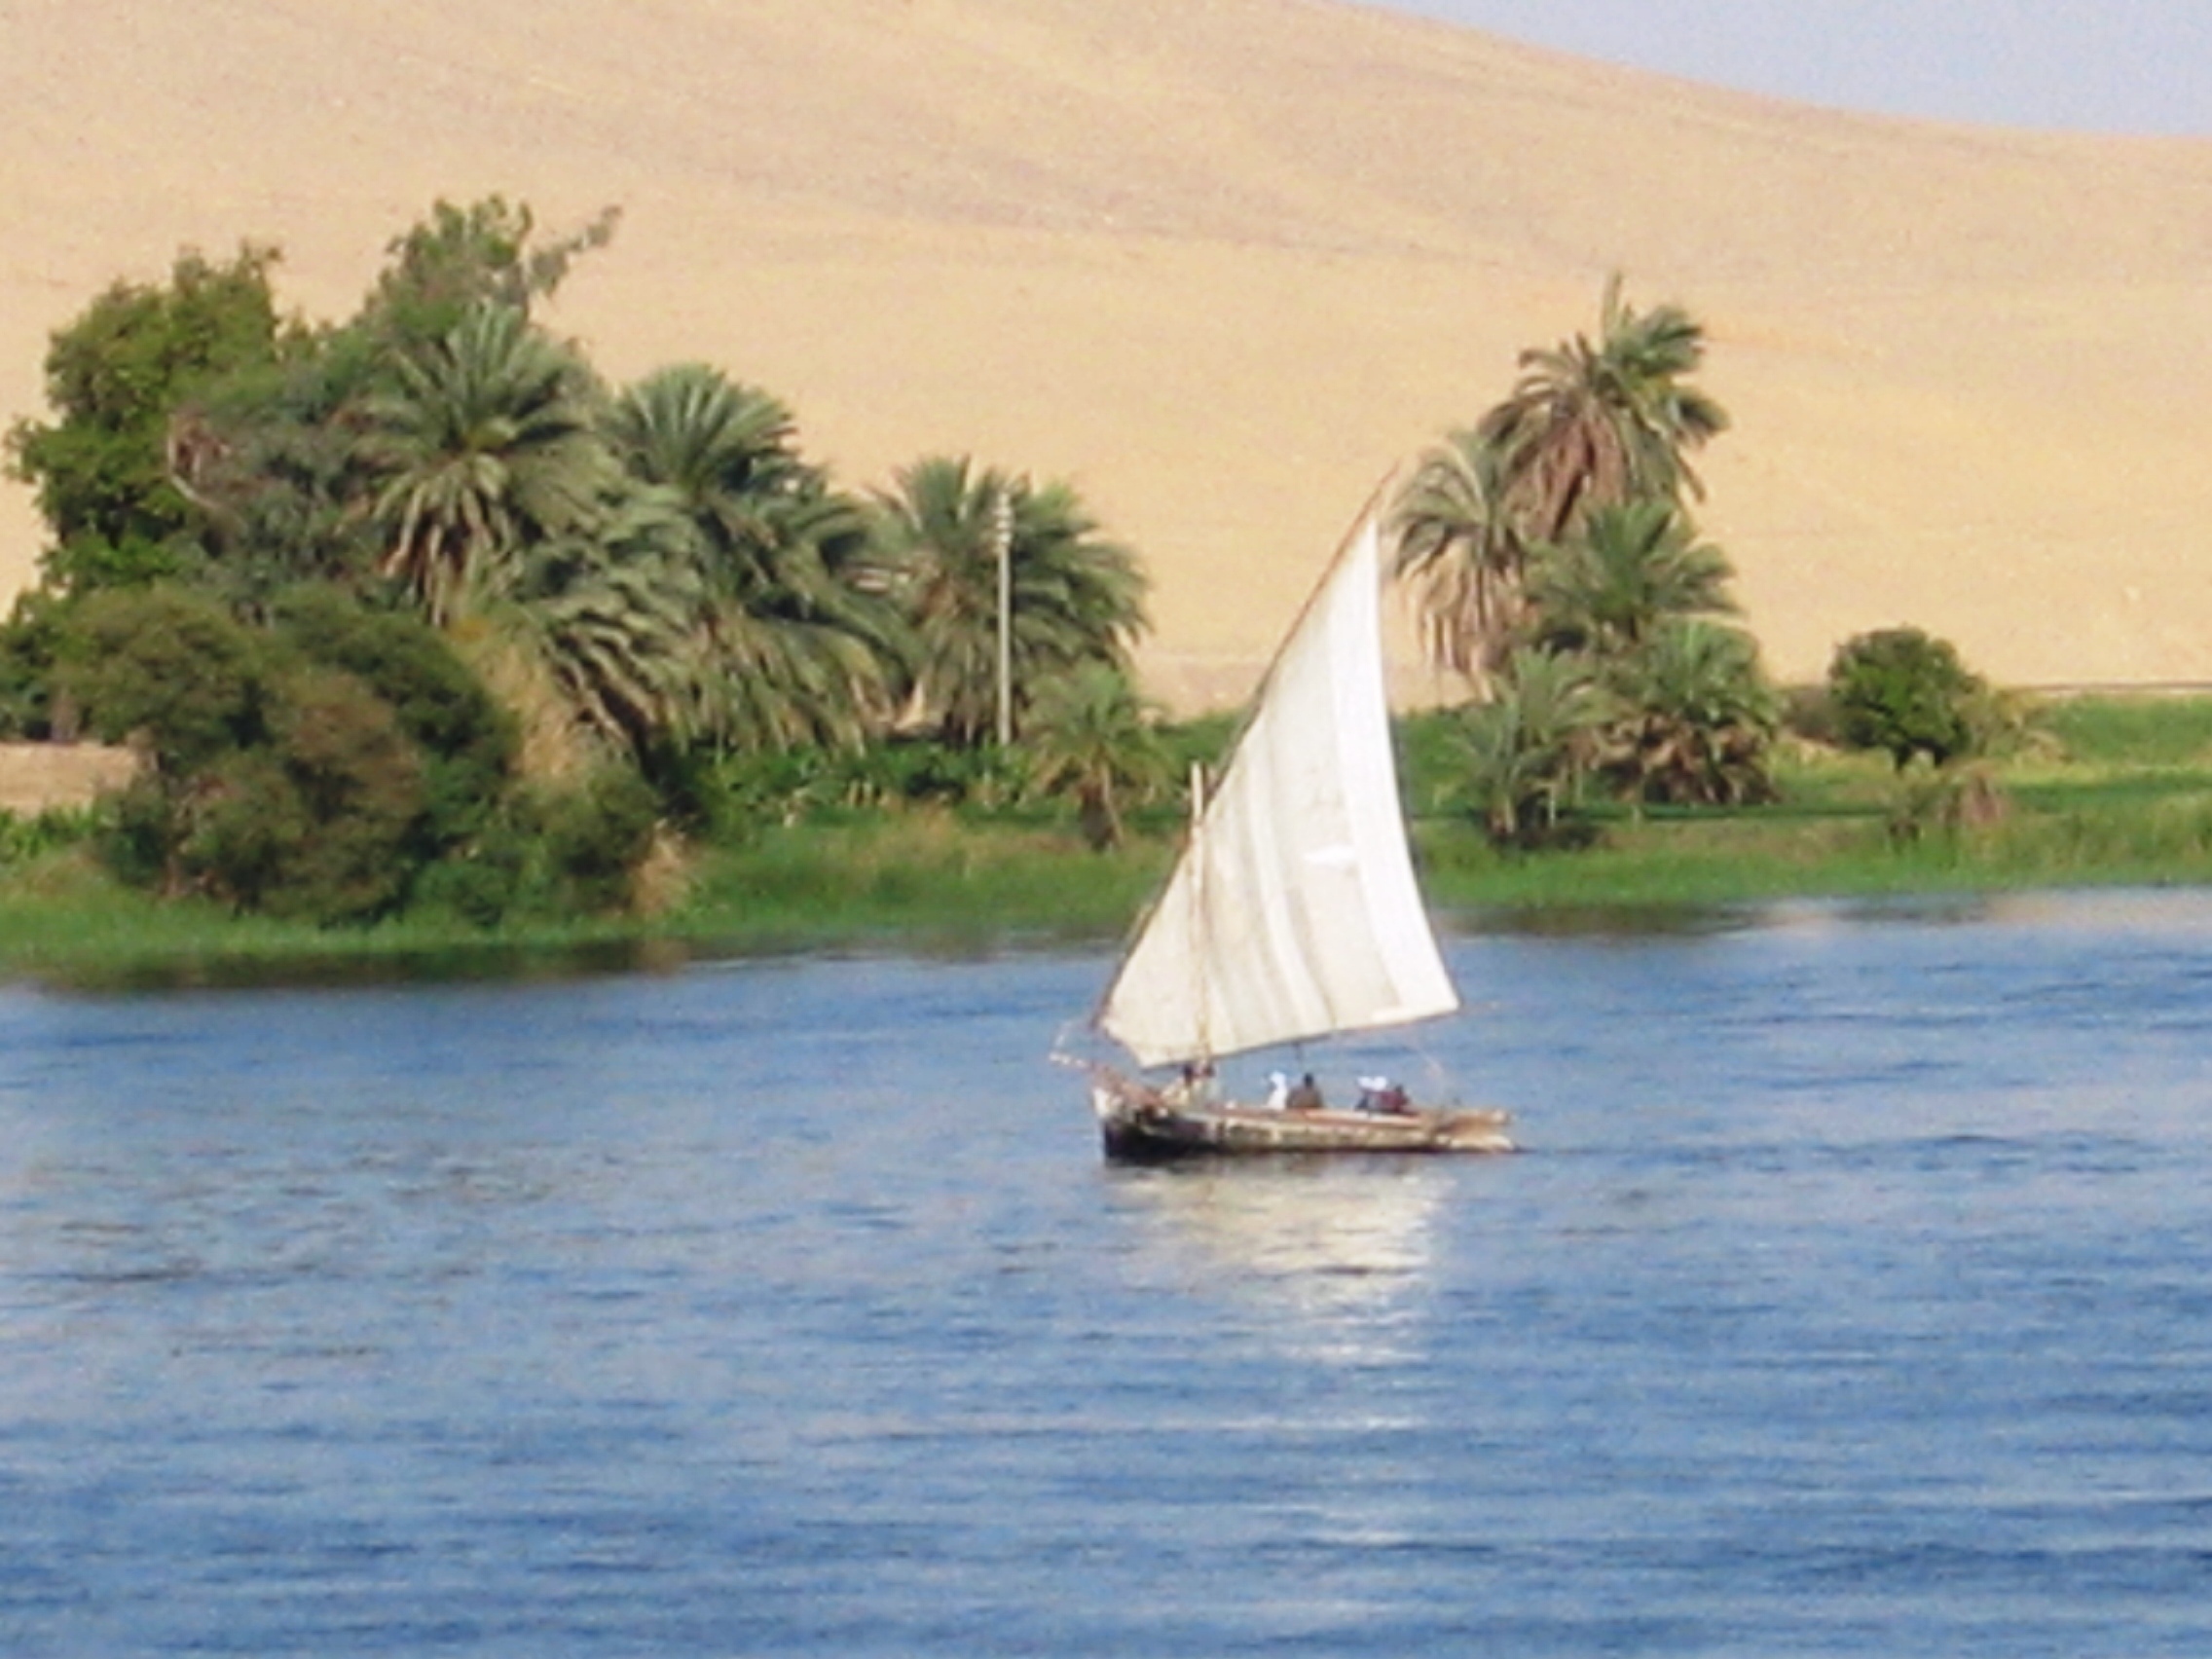 Egipto, 2007. Crucero por el Nilo. Falúa o faluca